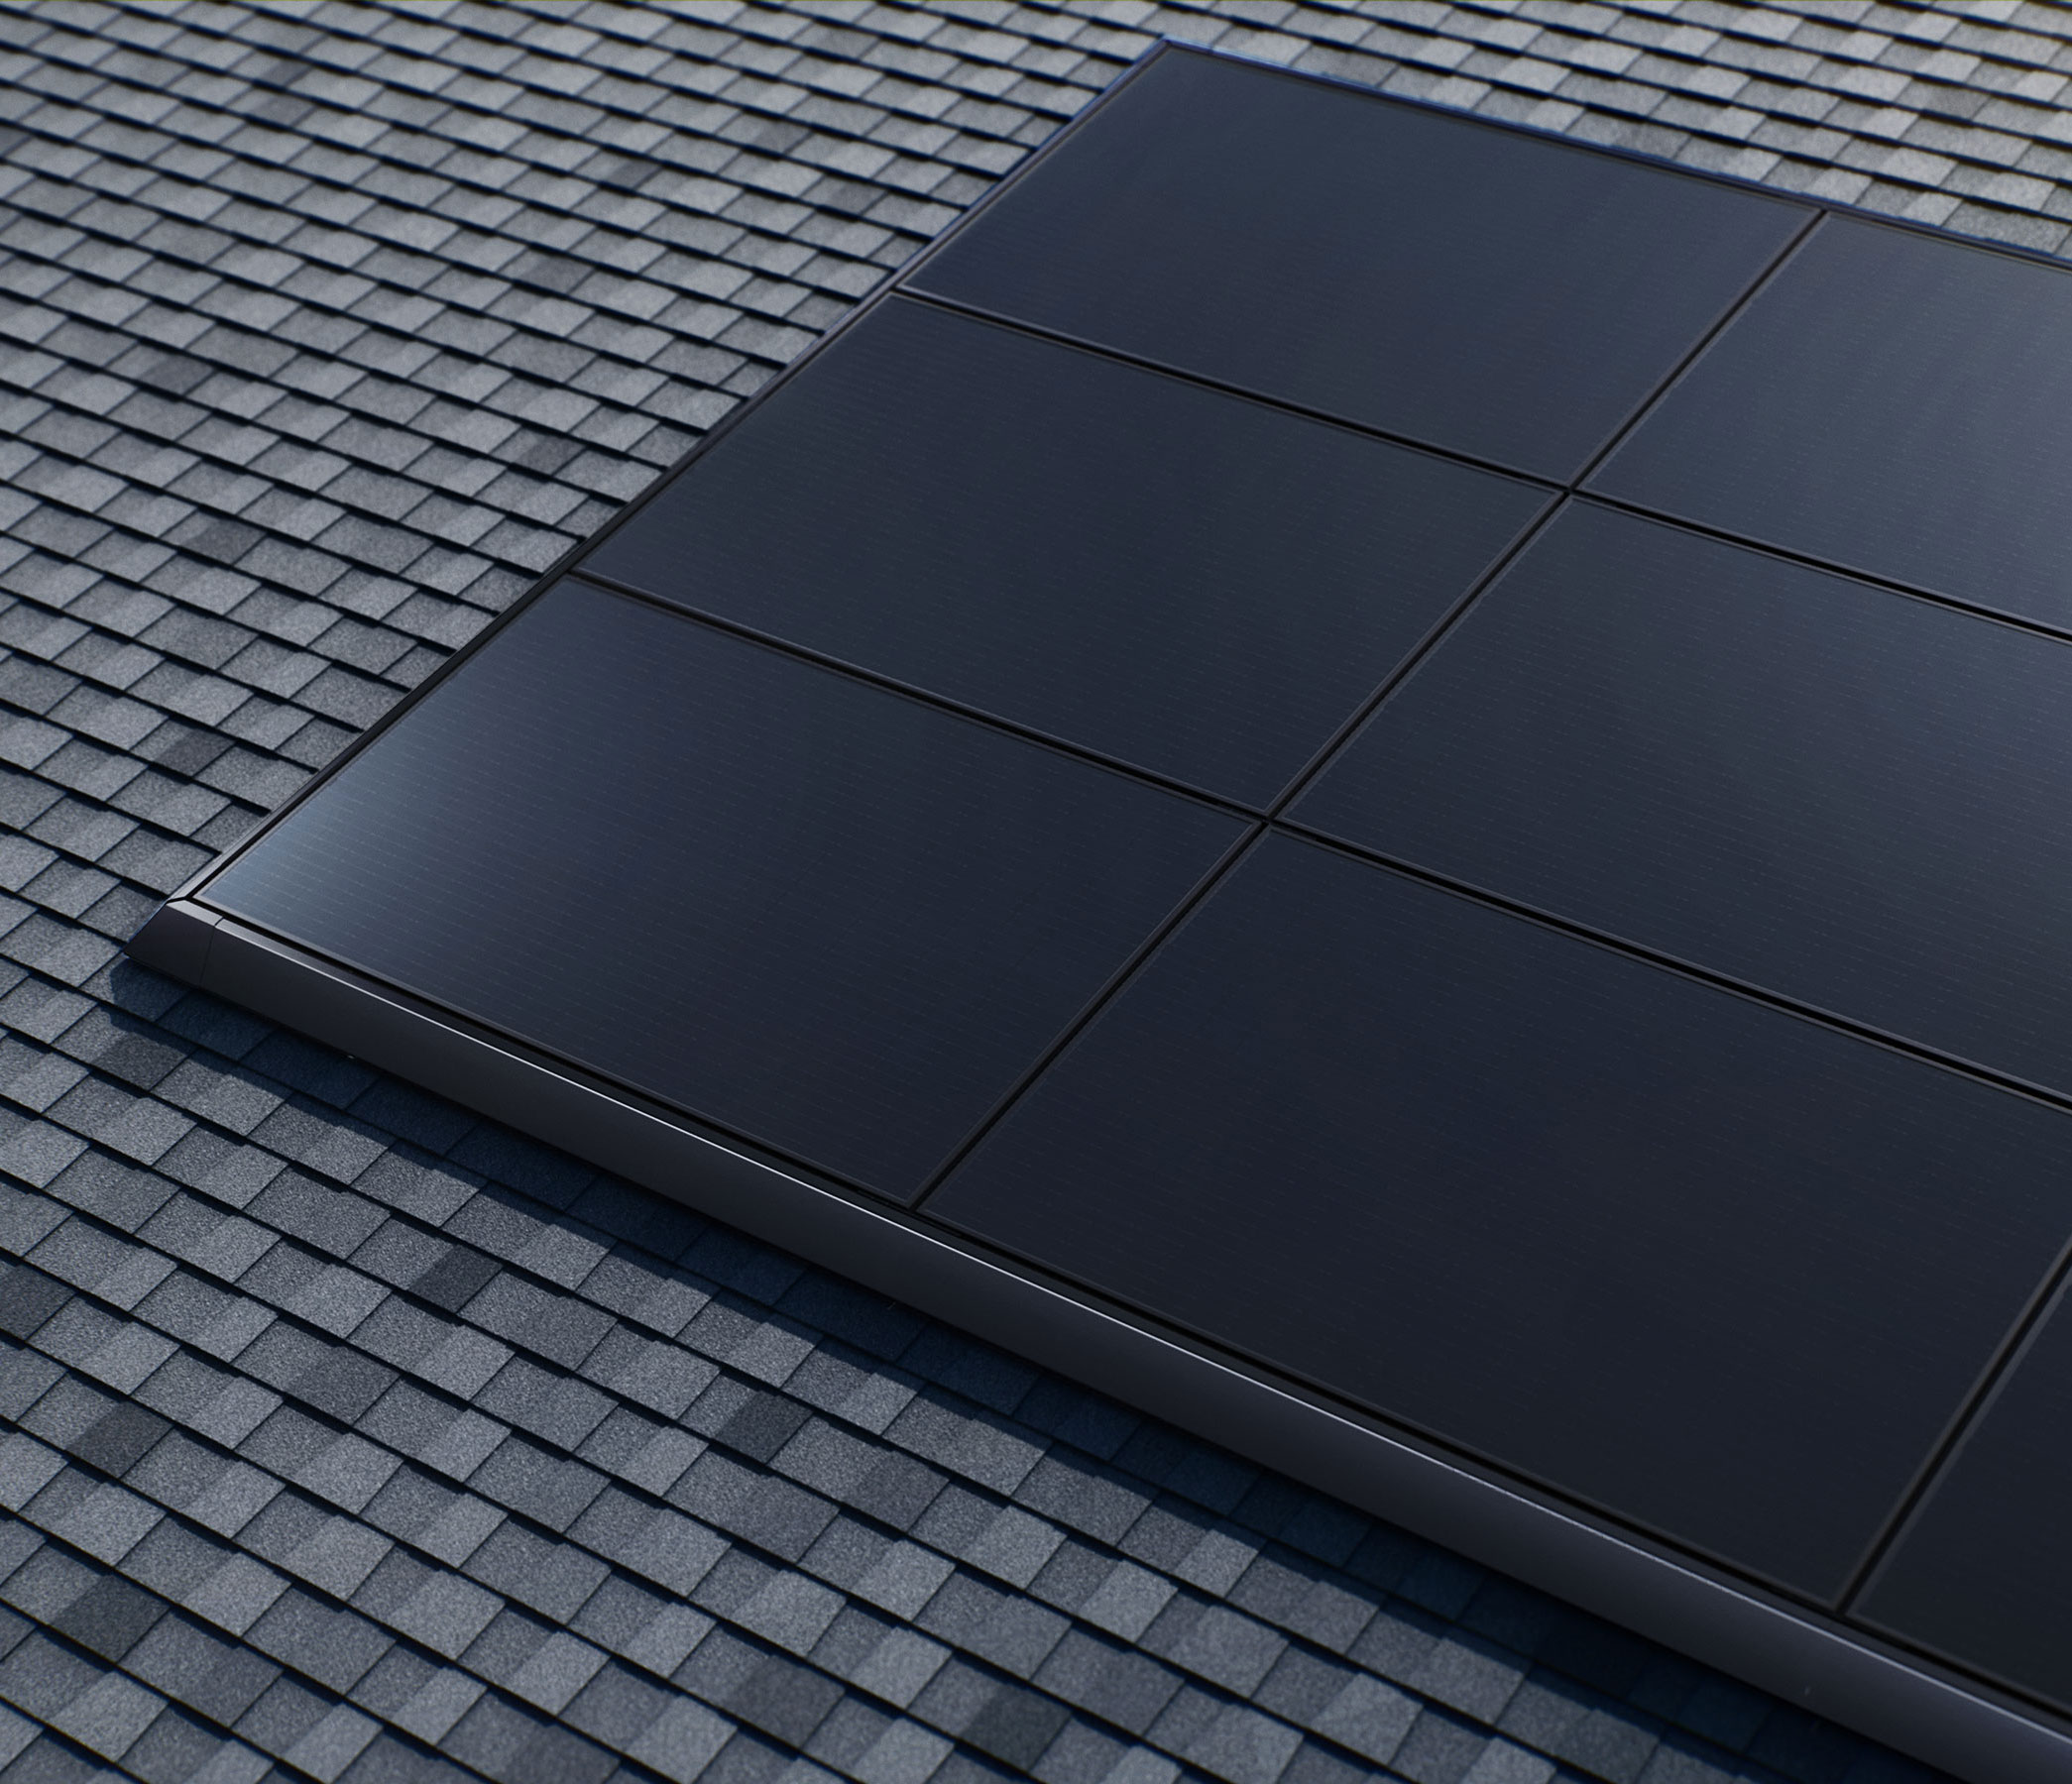 Solar panels design image